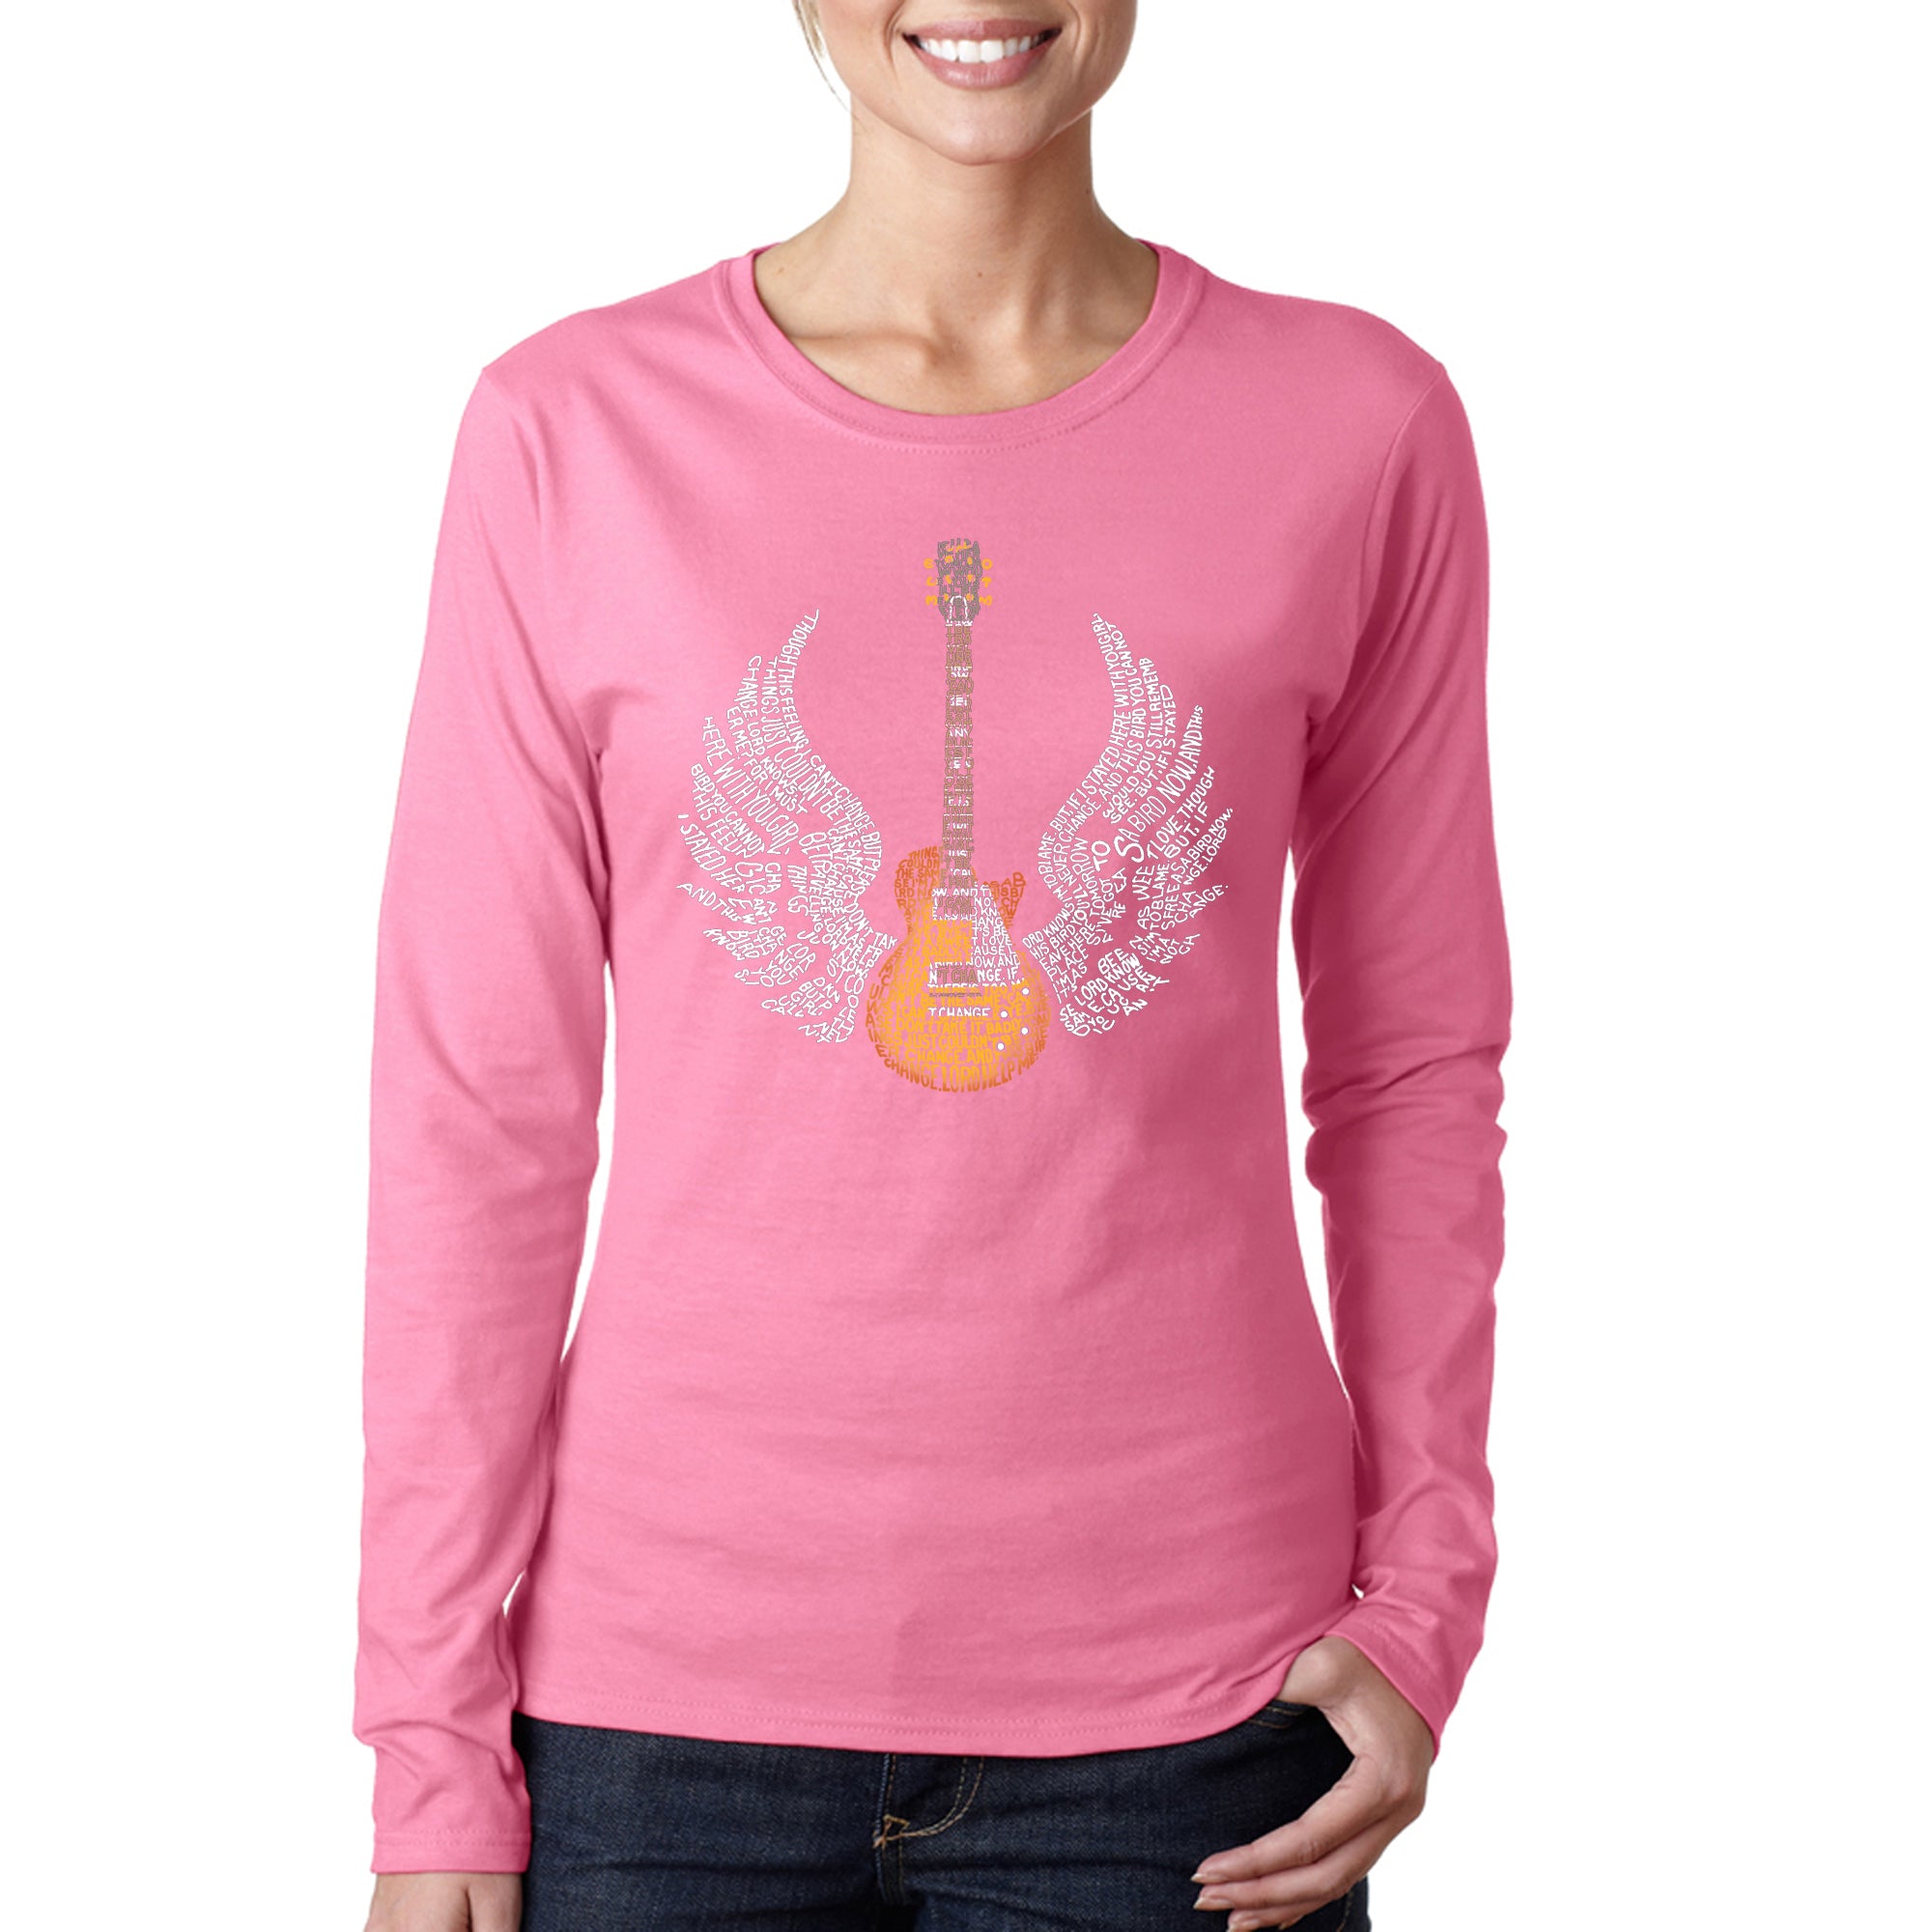 LYRICS TO FREE BIRD - Art Pop Women\'s T-Shirt LA – Long Word Art Sleeve